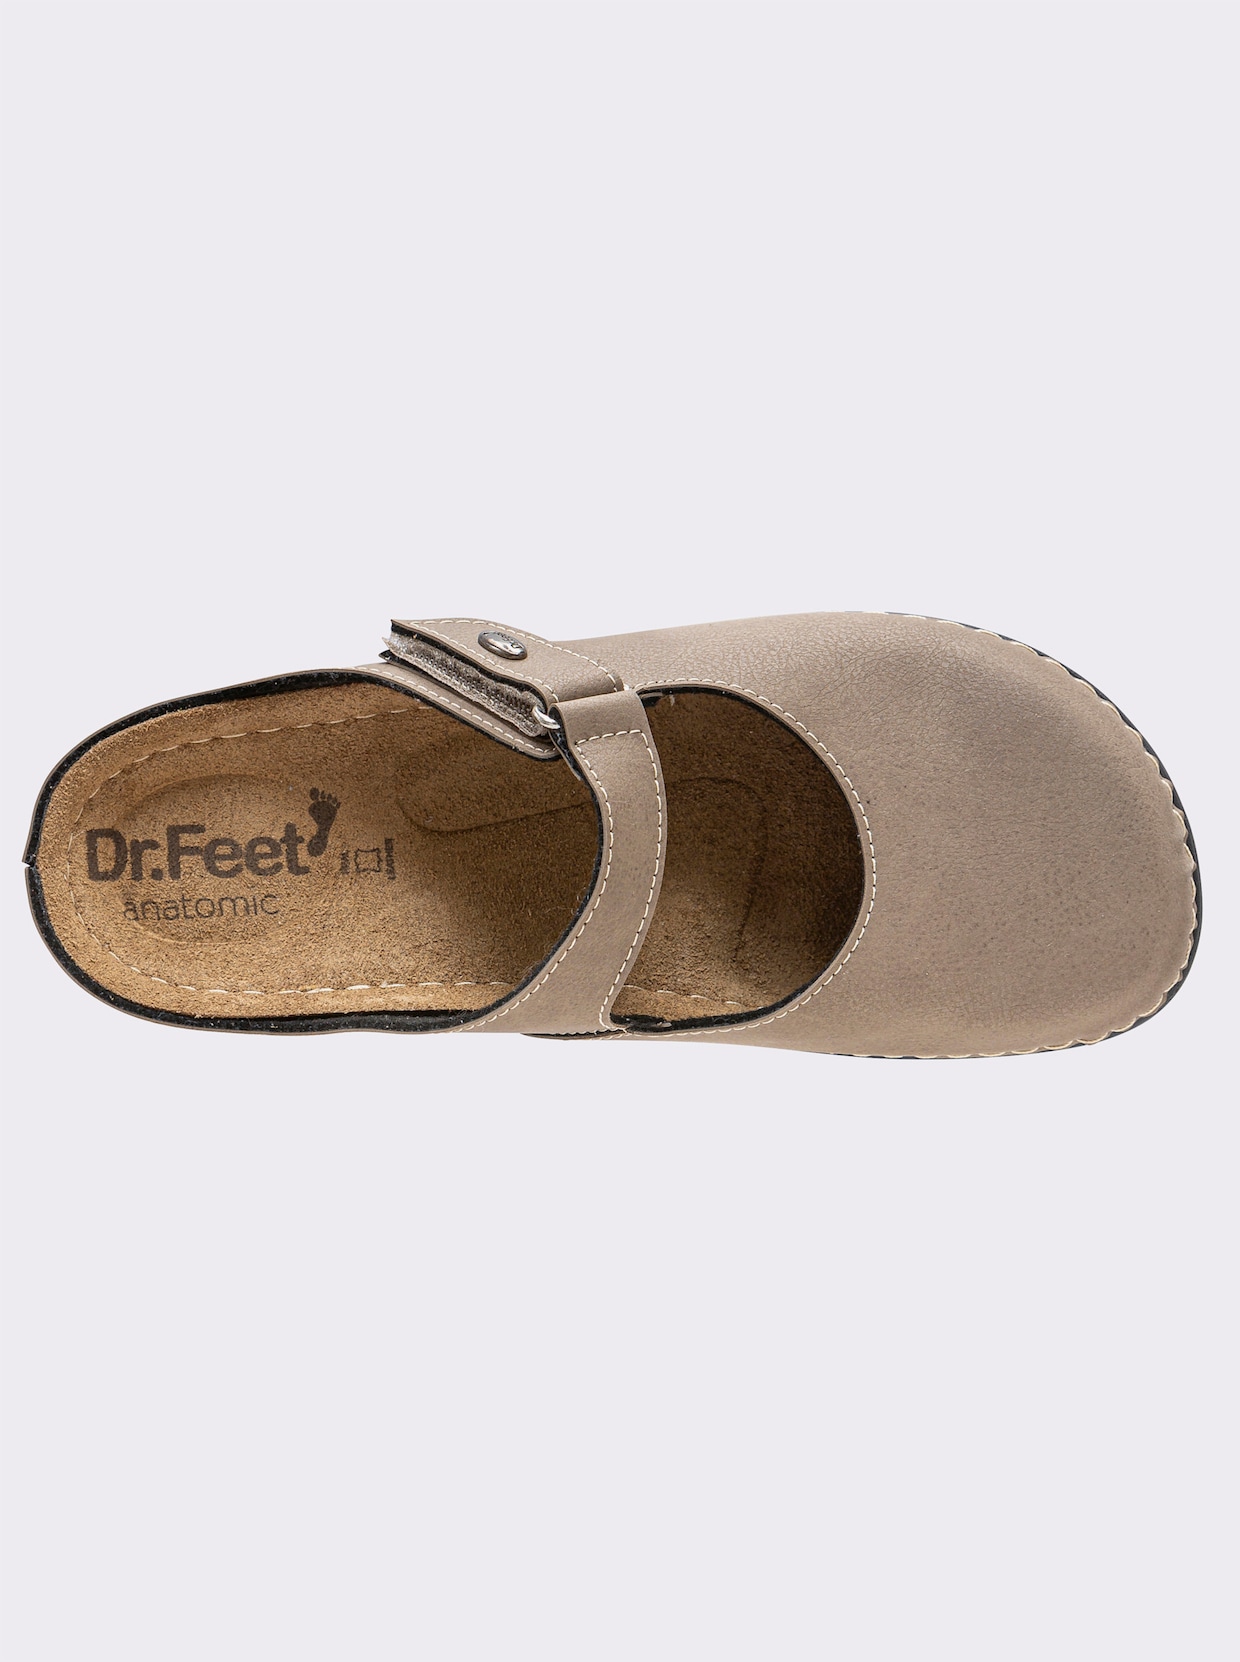 Dr. Feet Pantolette - taupe